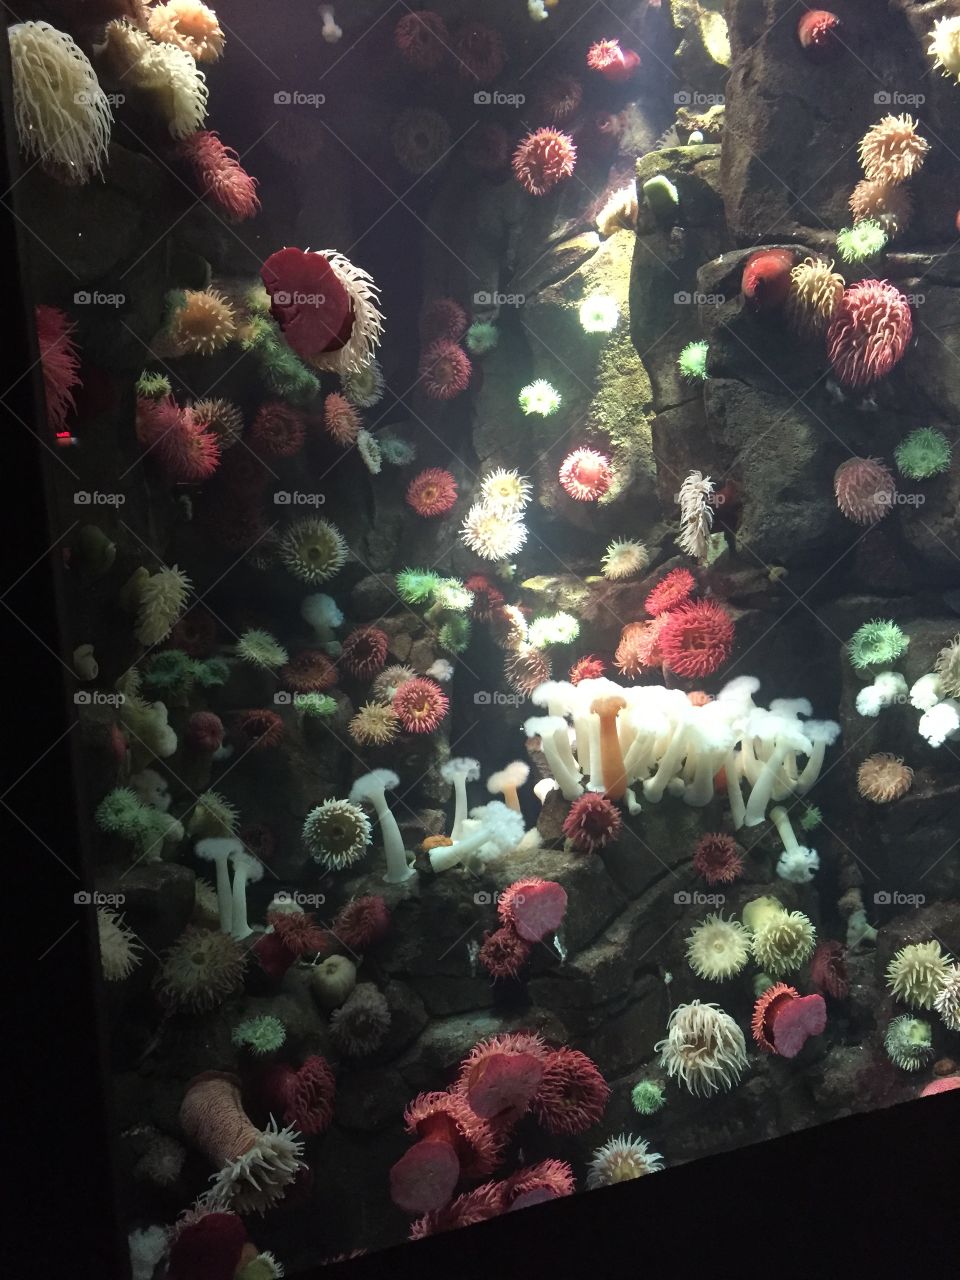 Aquarium, Ripleys Believe it or not 